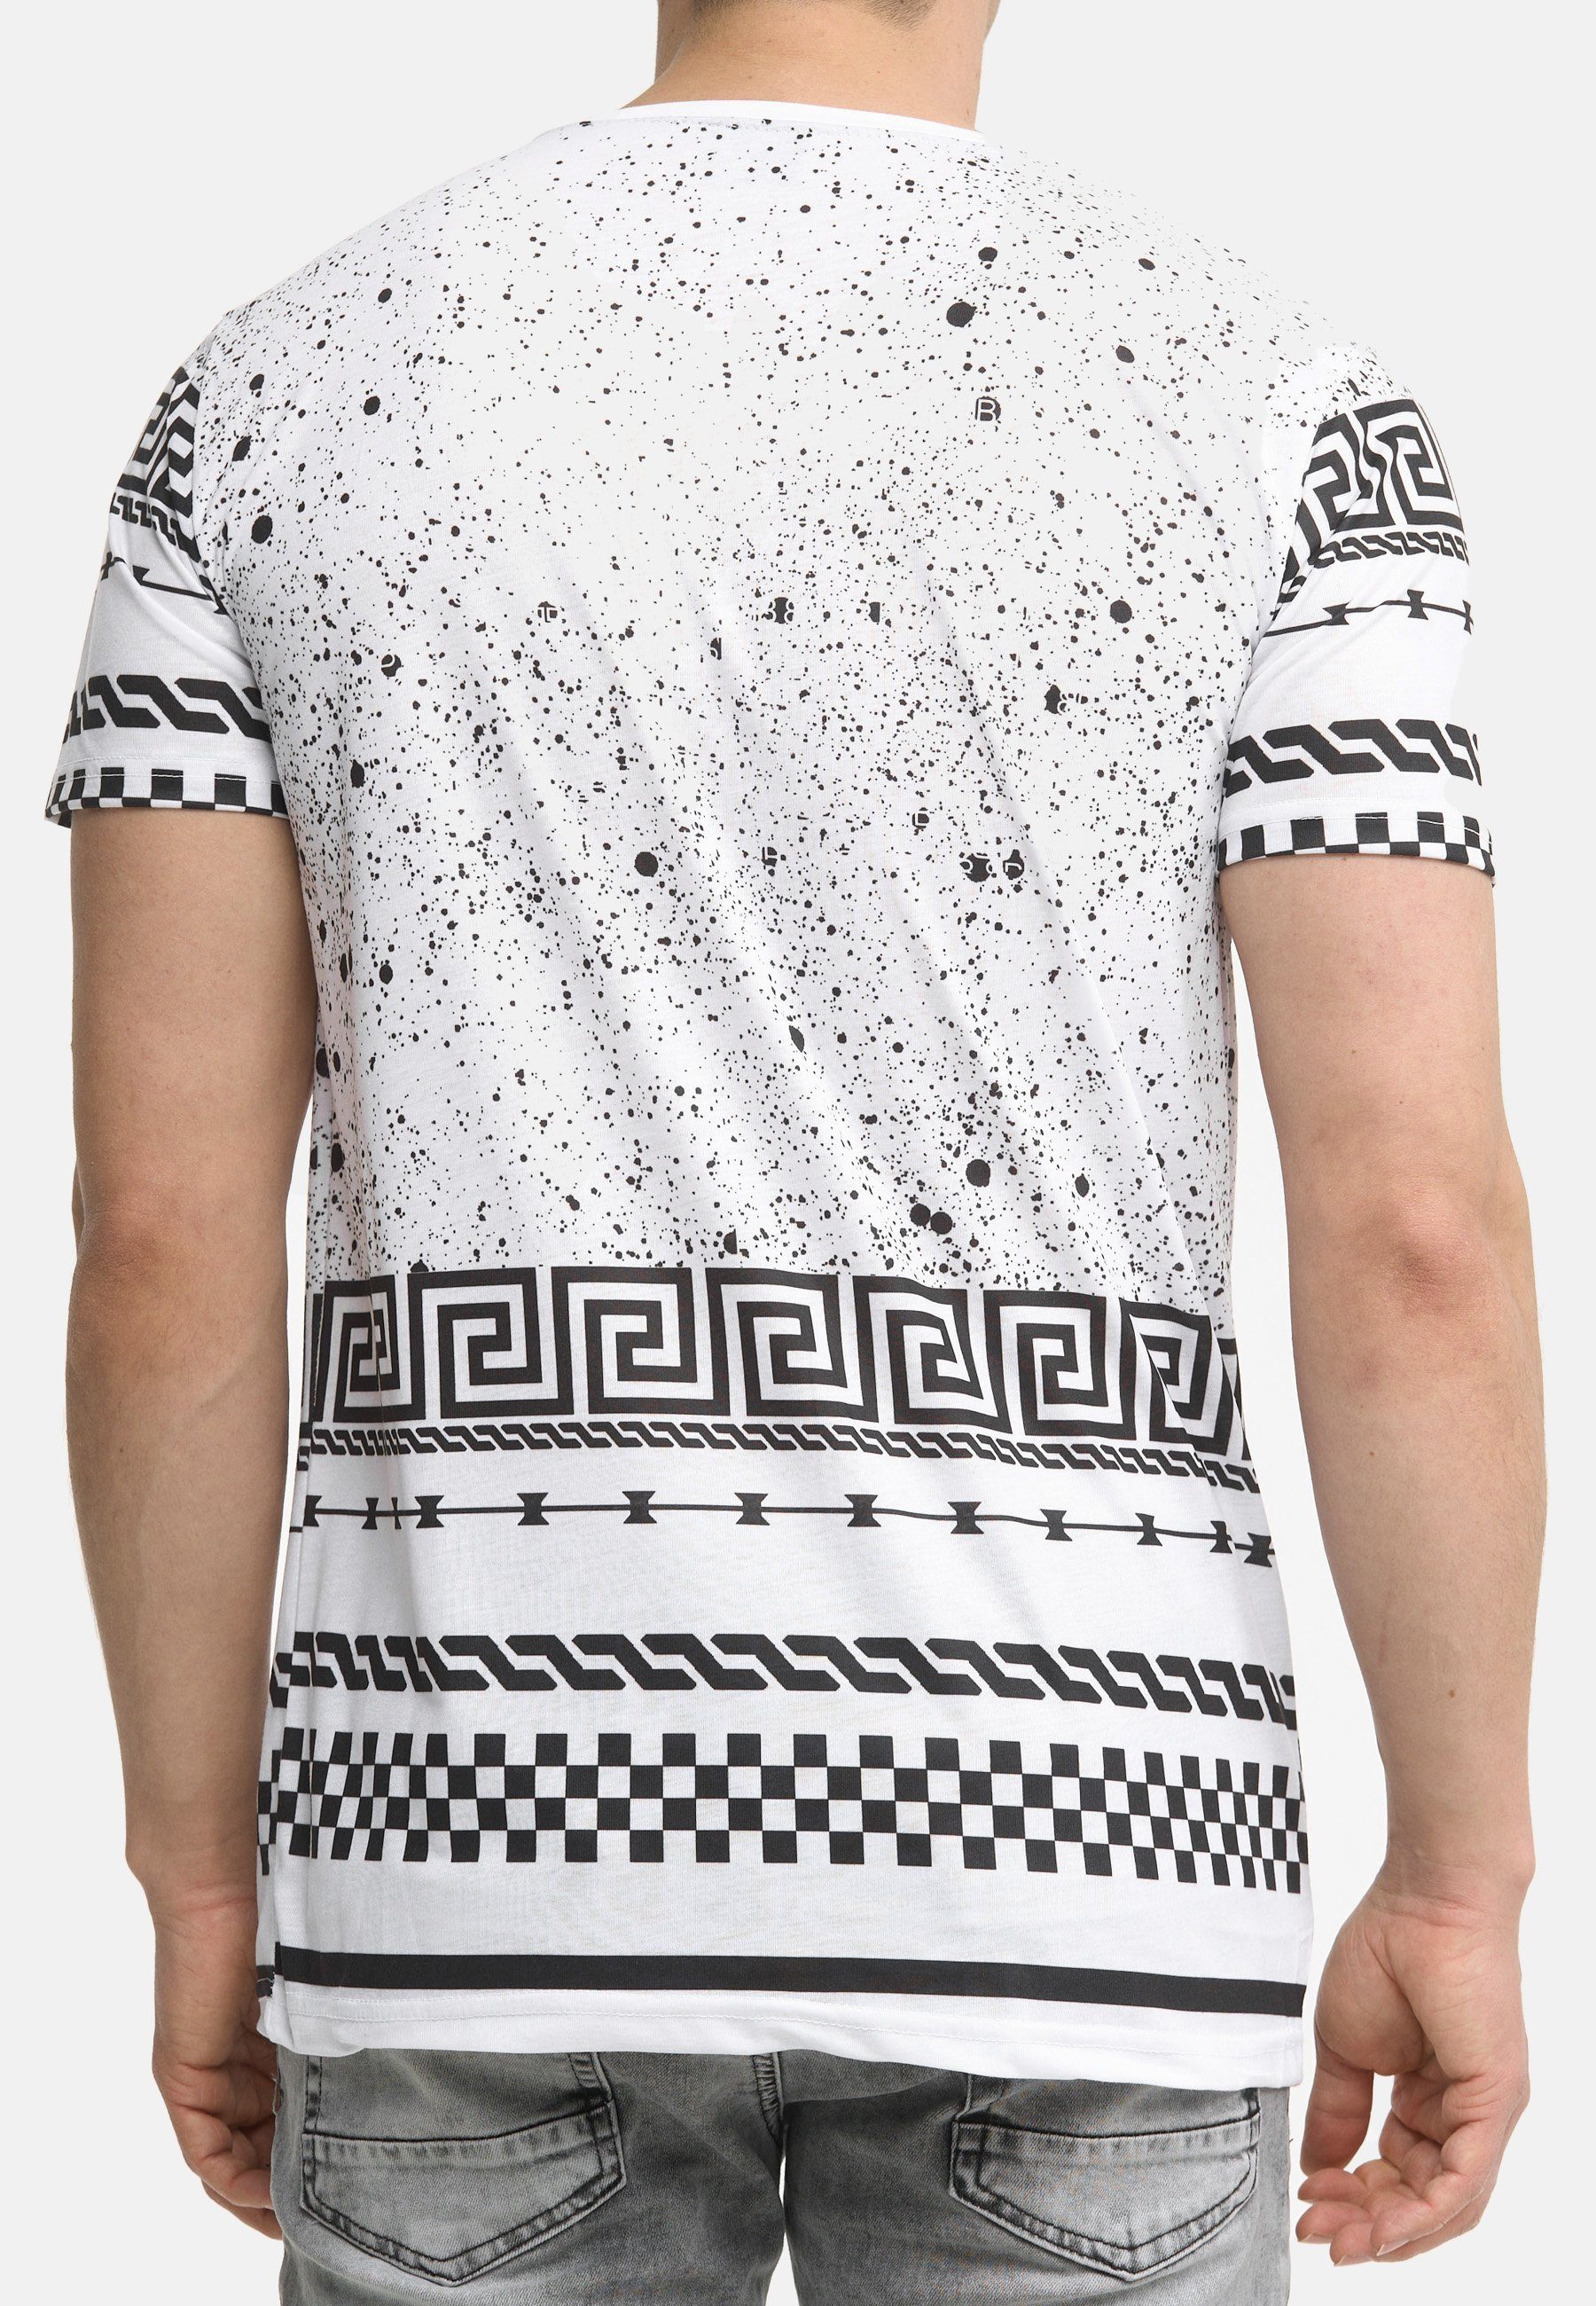 Code47 T-Shirt Code47 Herren T-Shirt Oberteil Designer Polo Printshirt Tee Weiß 1-tlg) Shortsleev Shirt, (Longsleeve